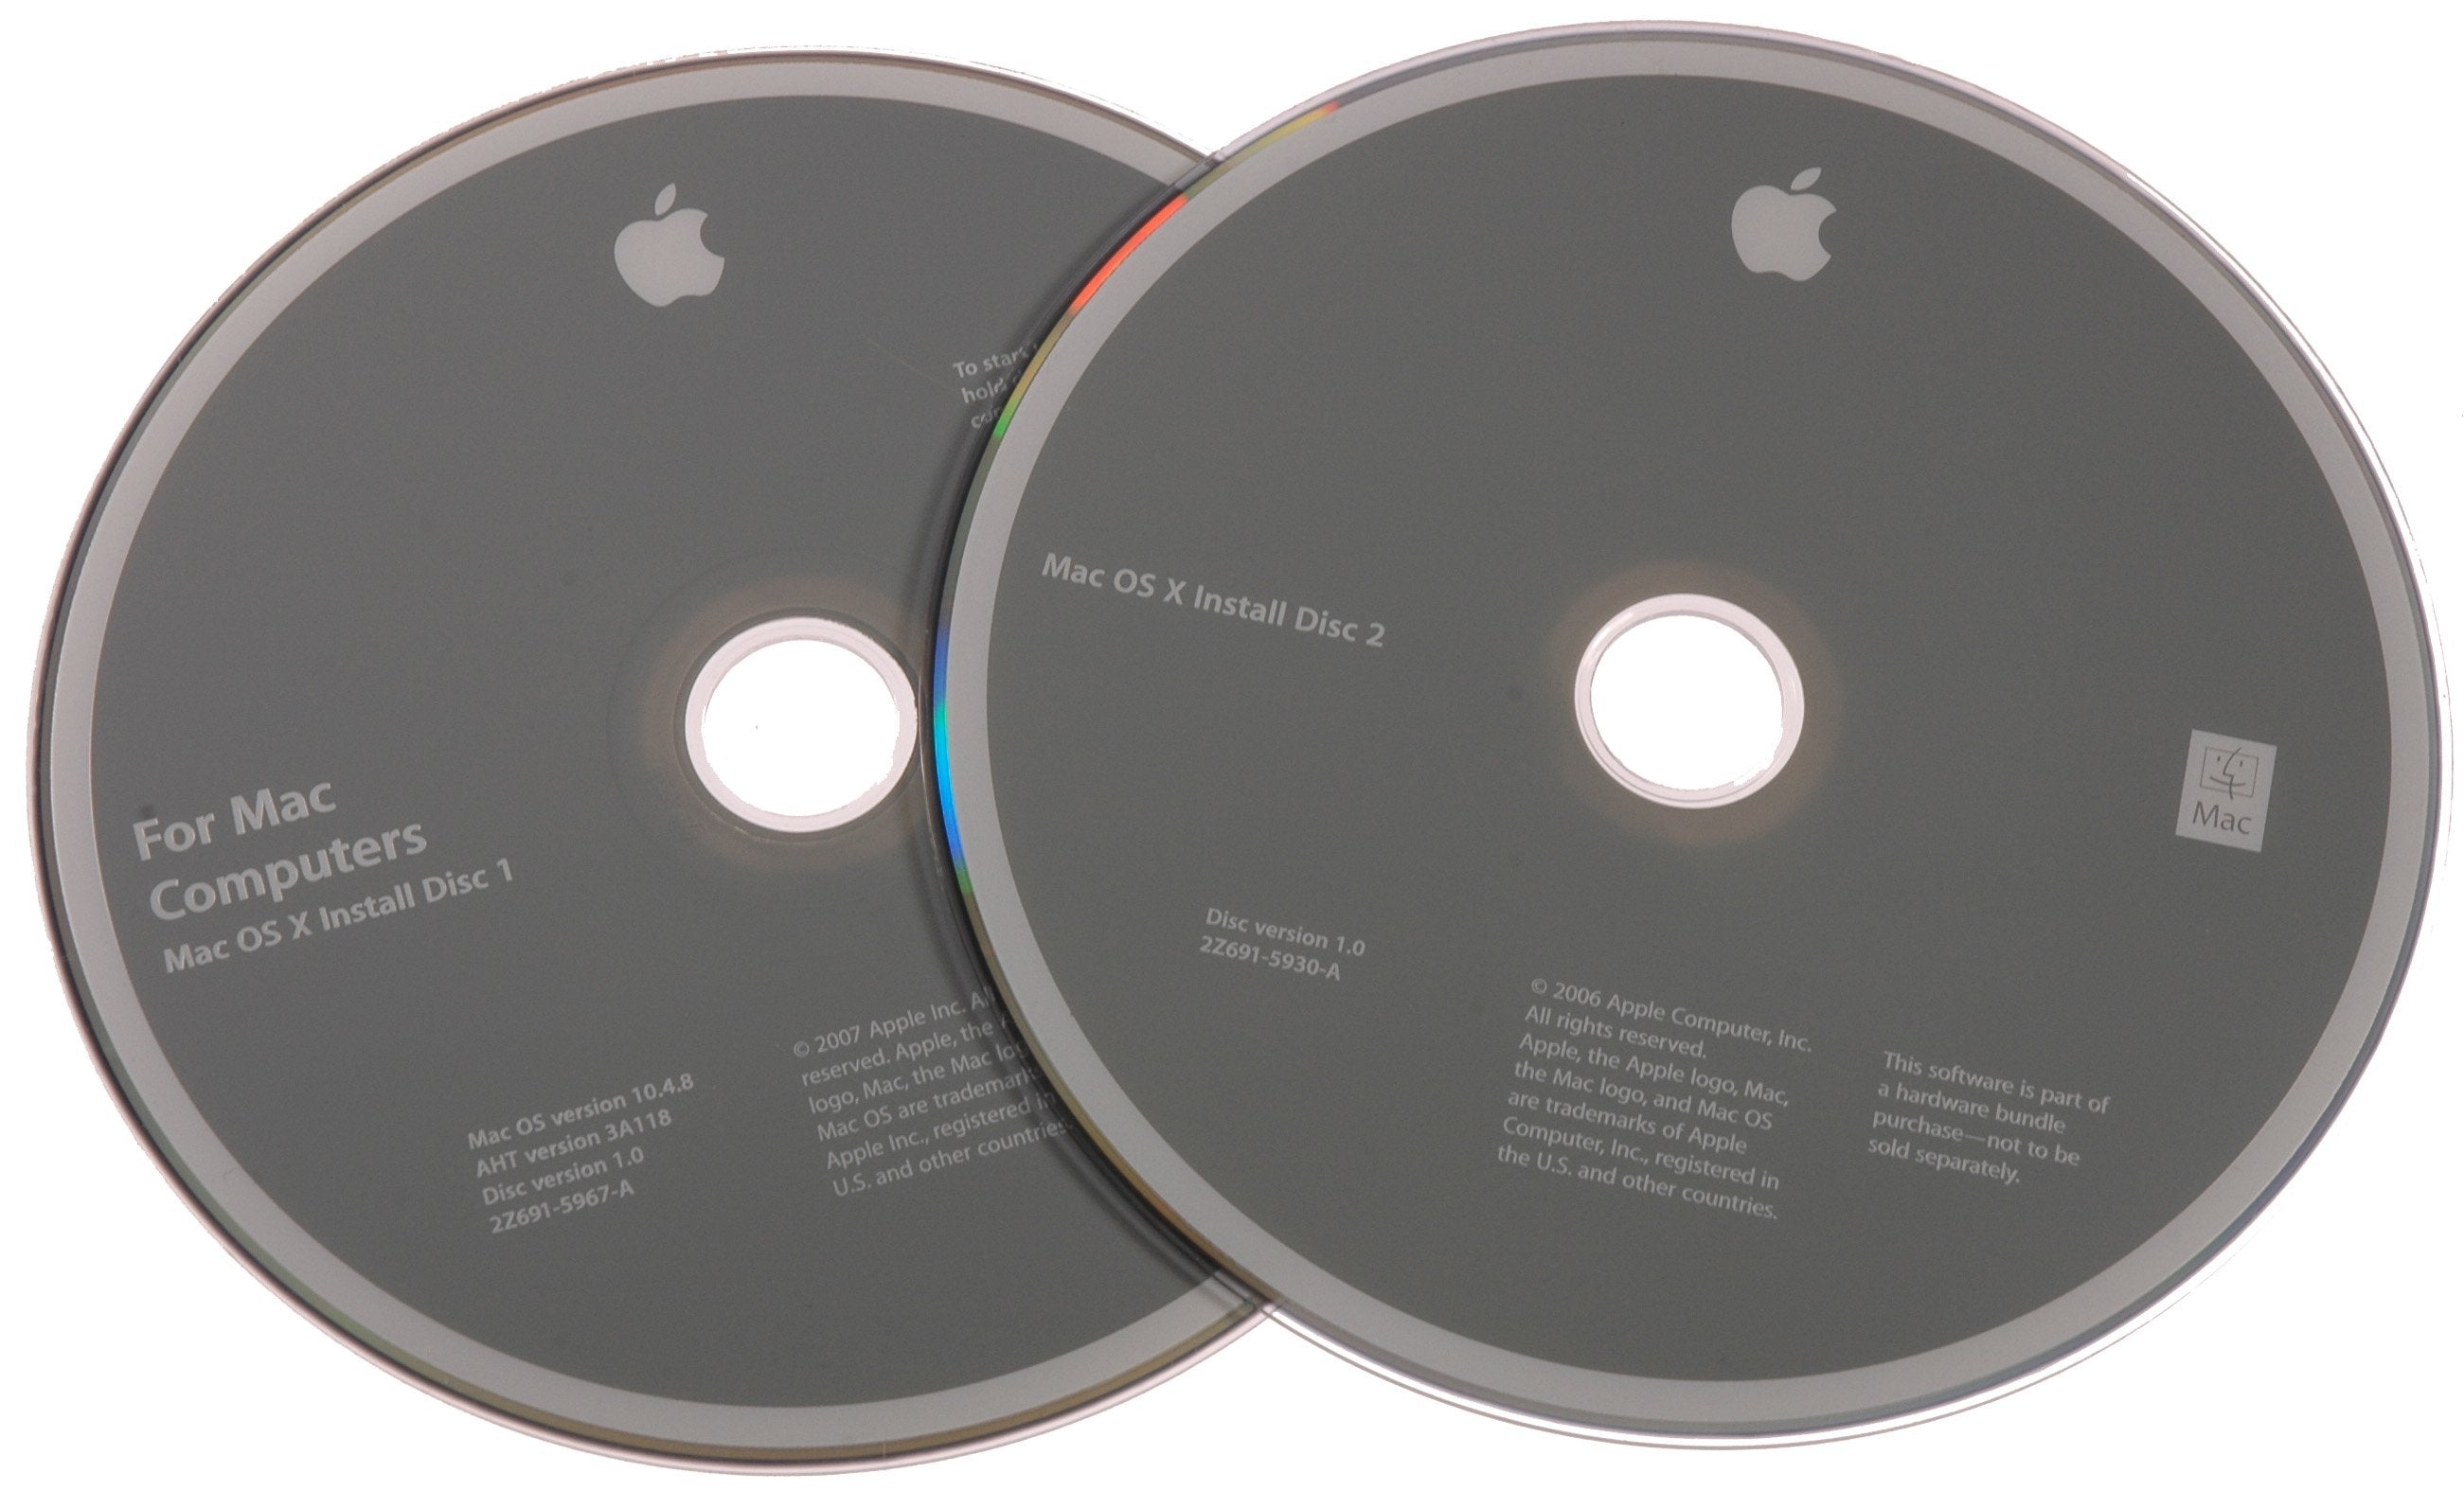 MacBook Pro 15" (Model A1211) Restore DVDs